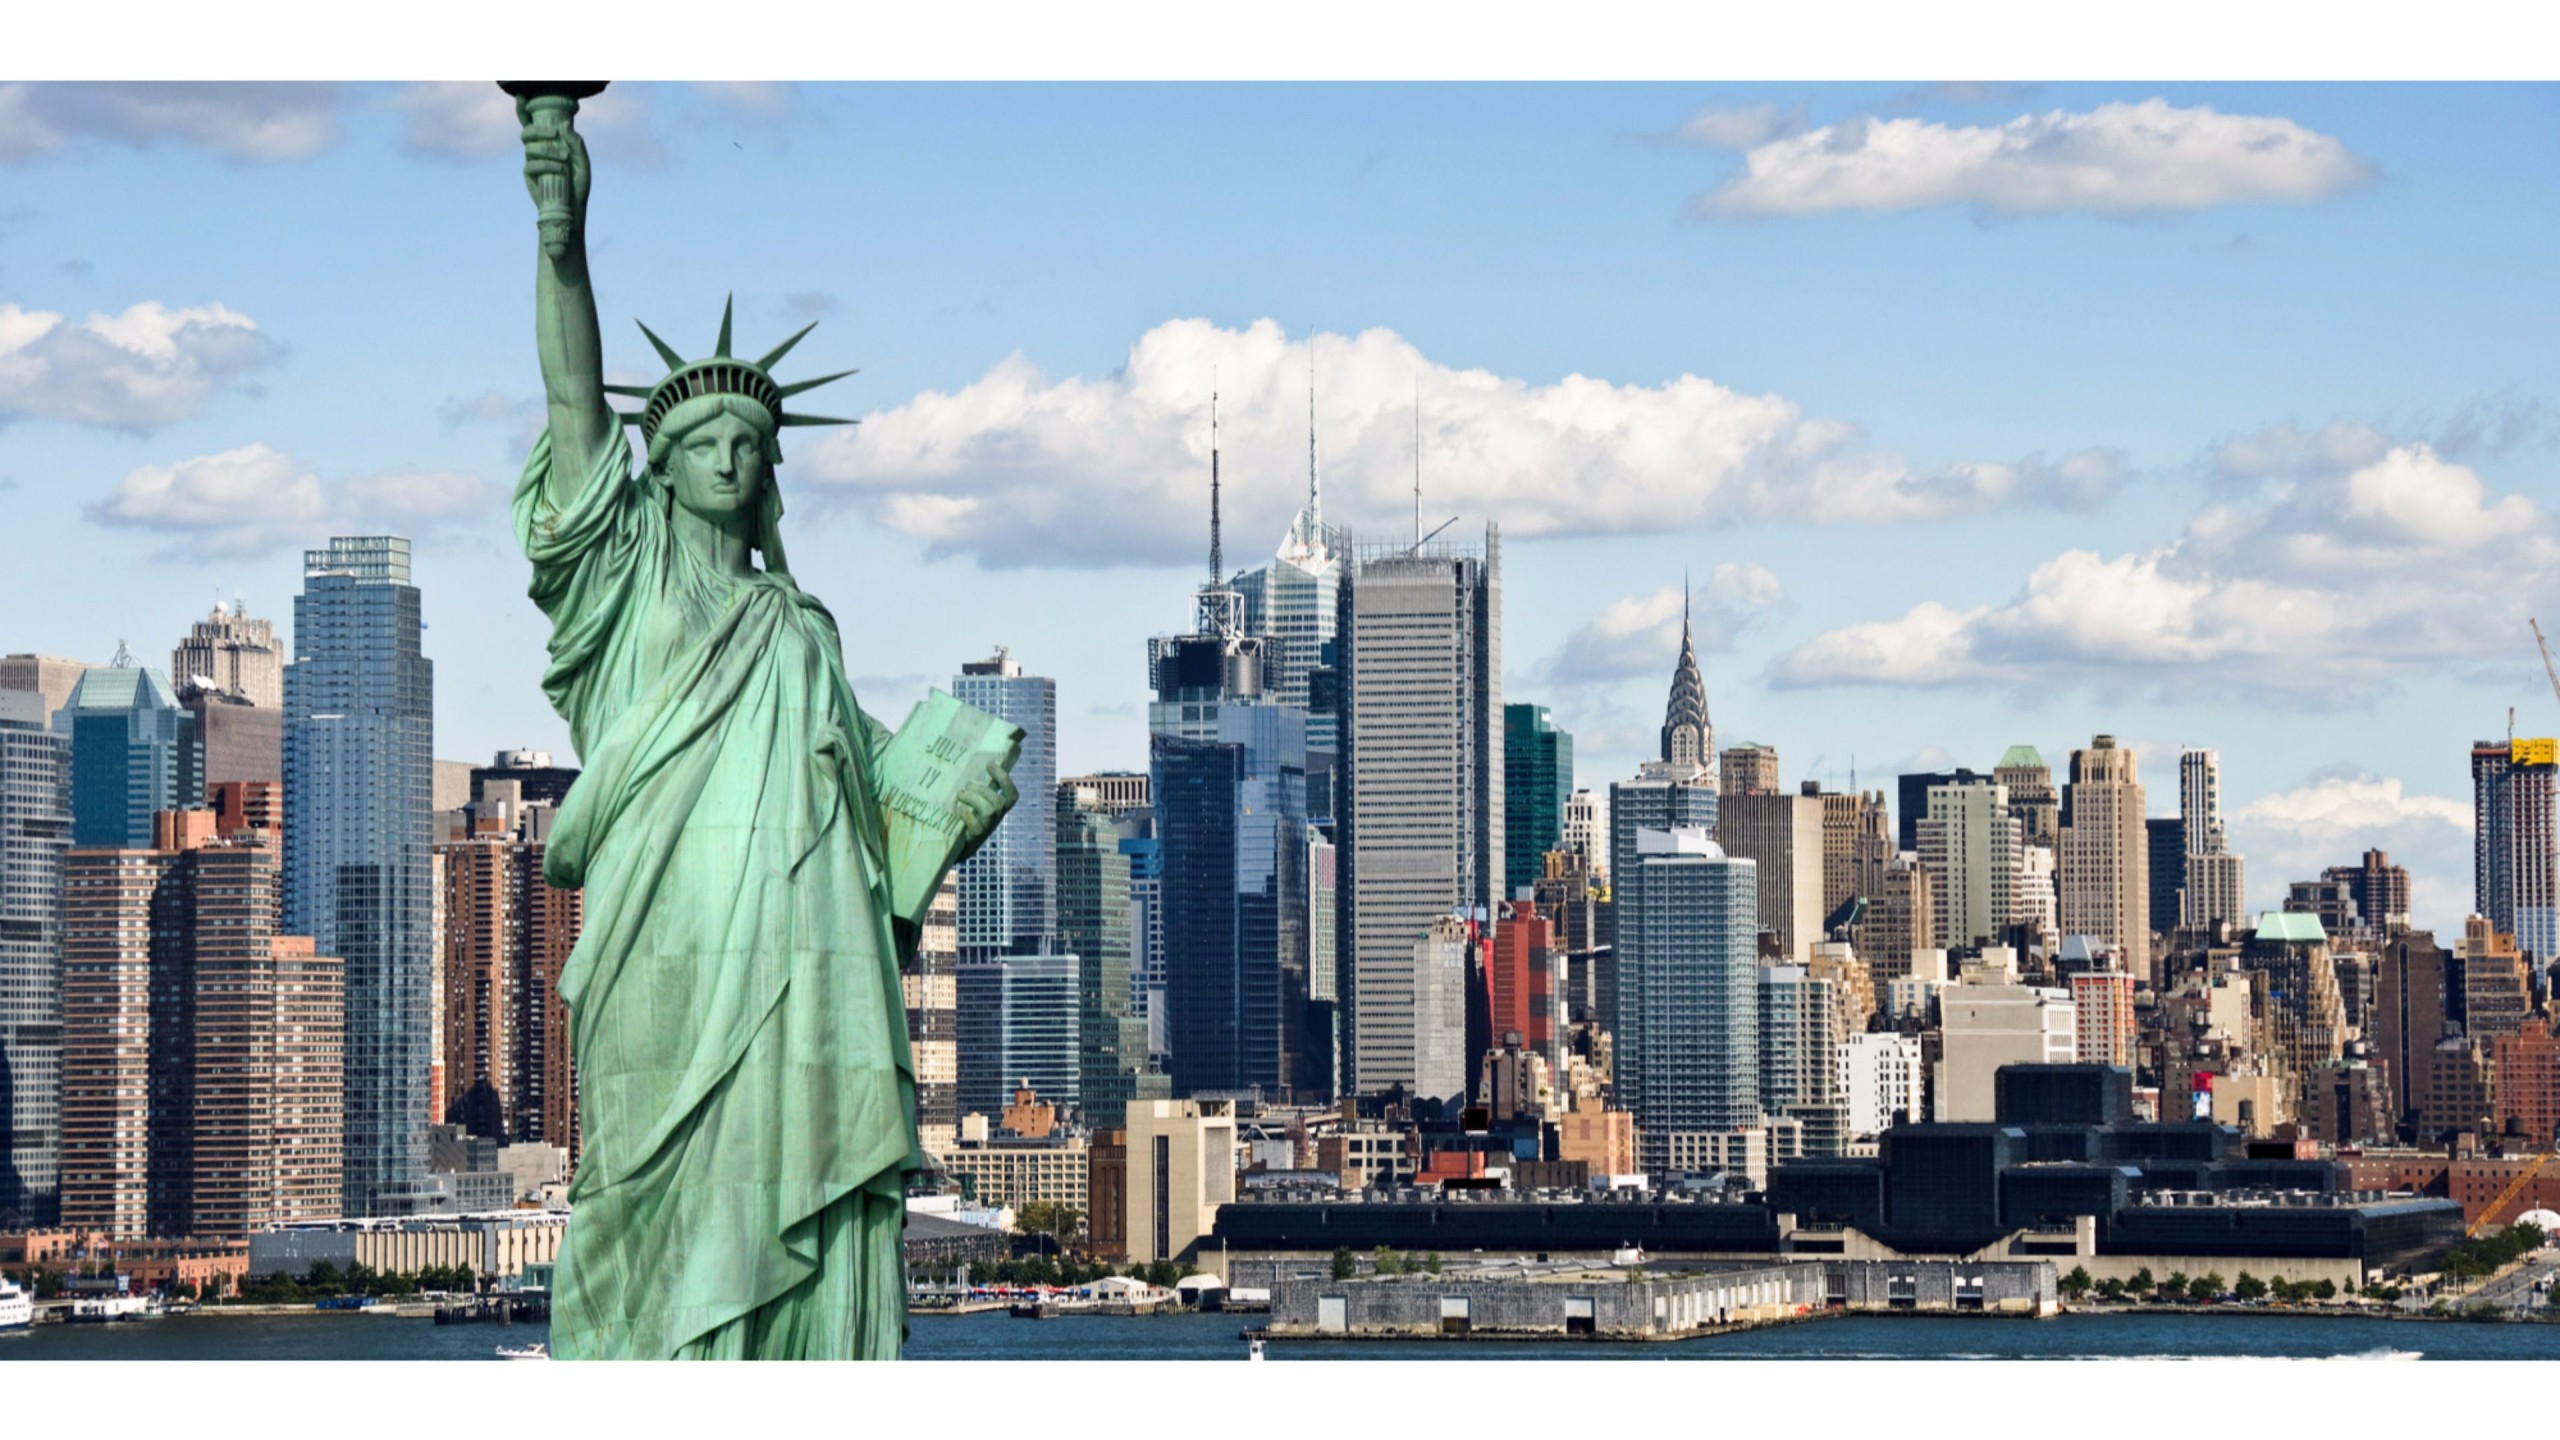 Statue of Liberty New York City 4K Wallpaper Free 4K